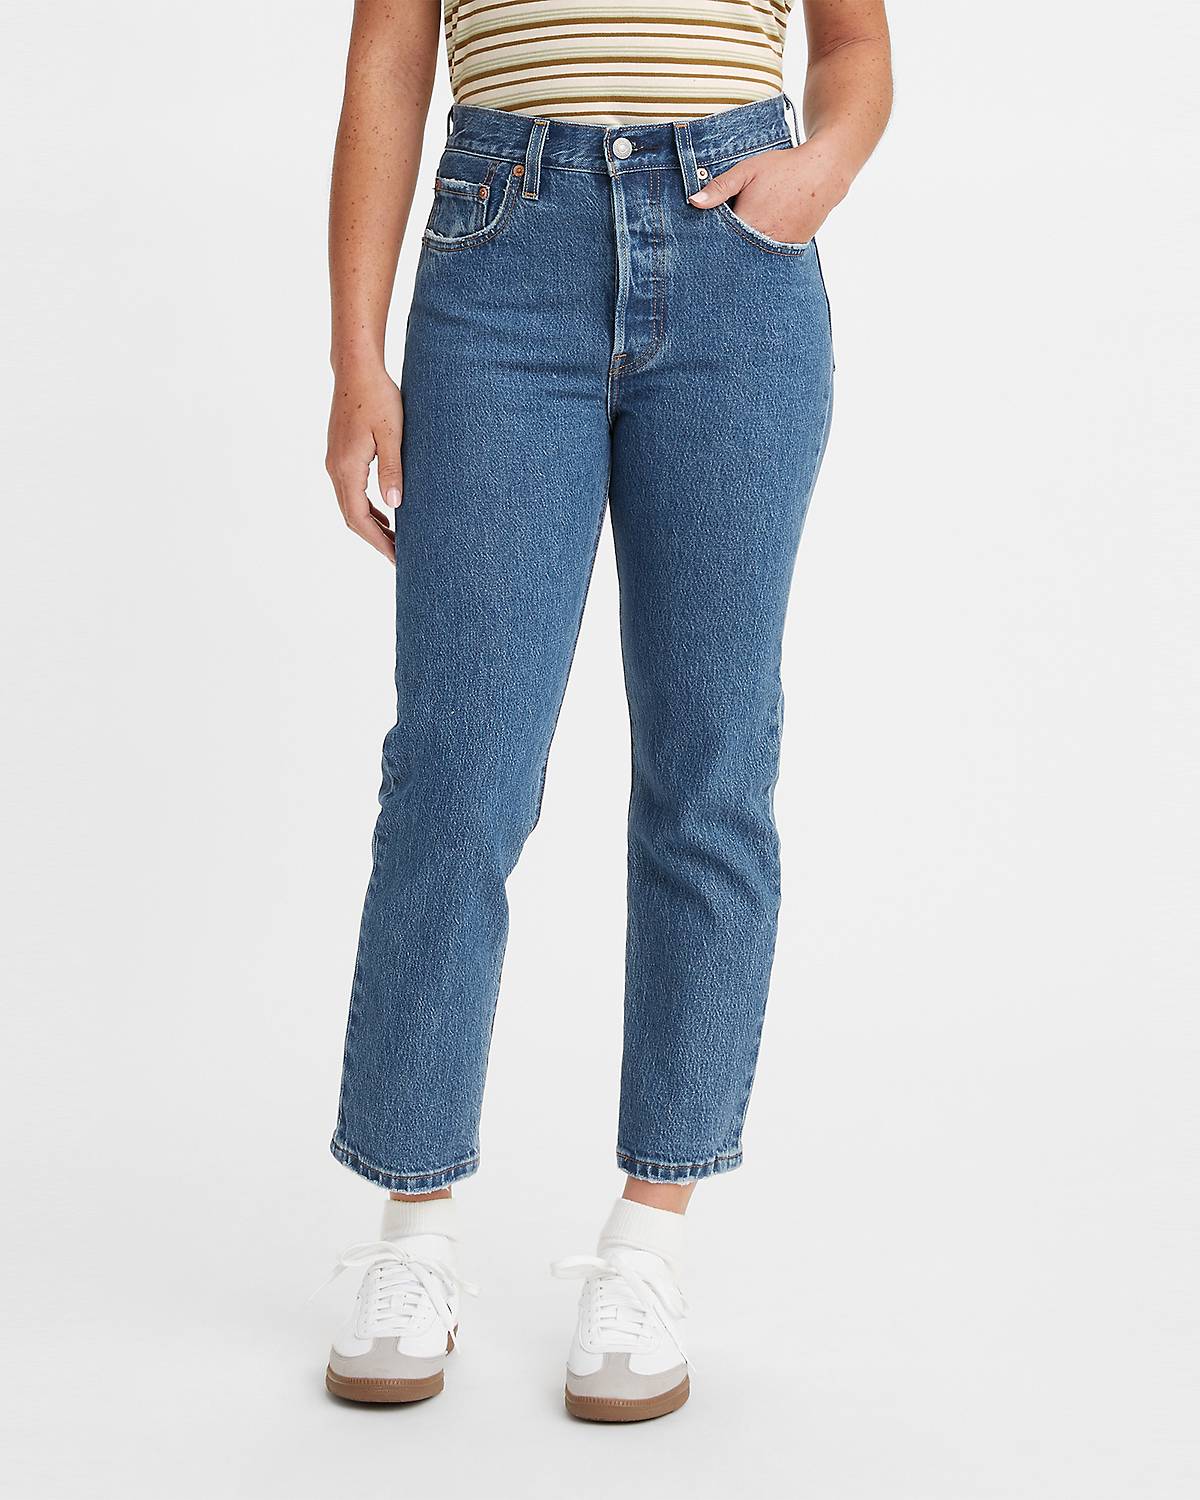 Buy Women Blue Regular Fit Light Wash Jeans Online - 741590